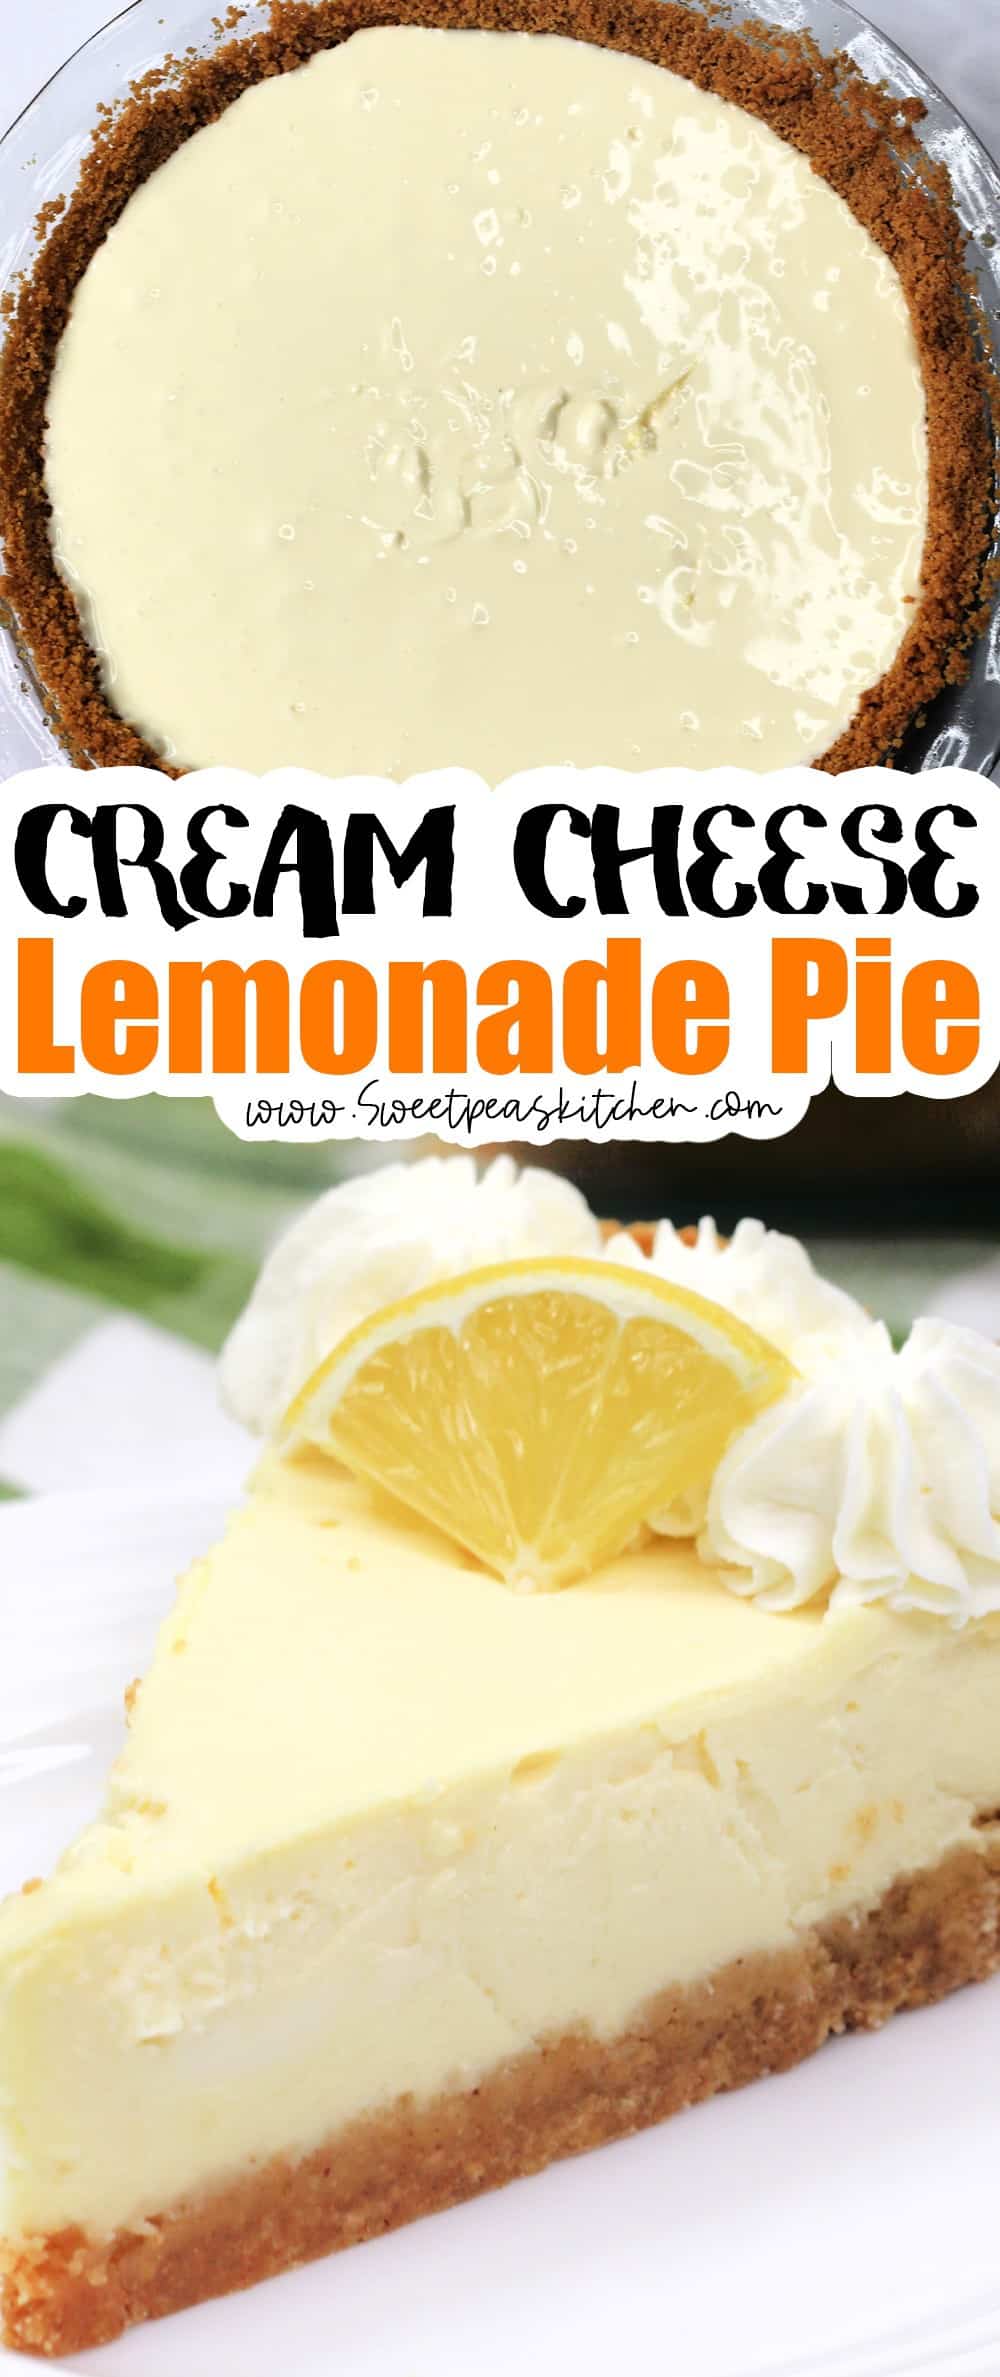 Cream Cheese Lemonade Pie on pinterest